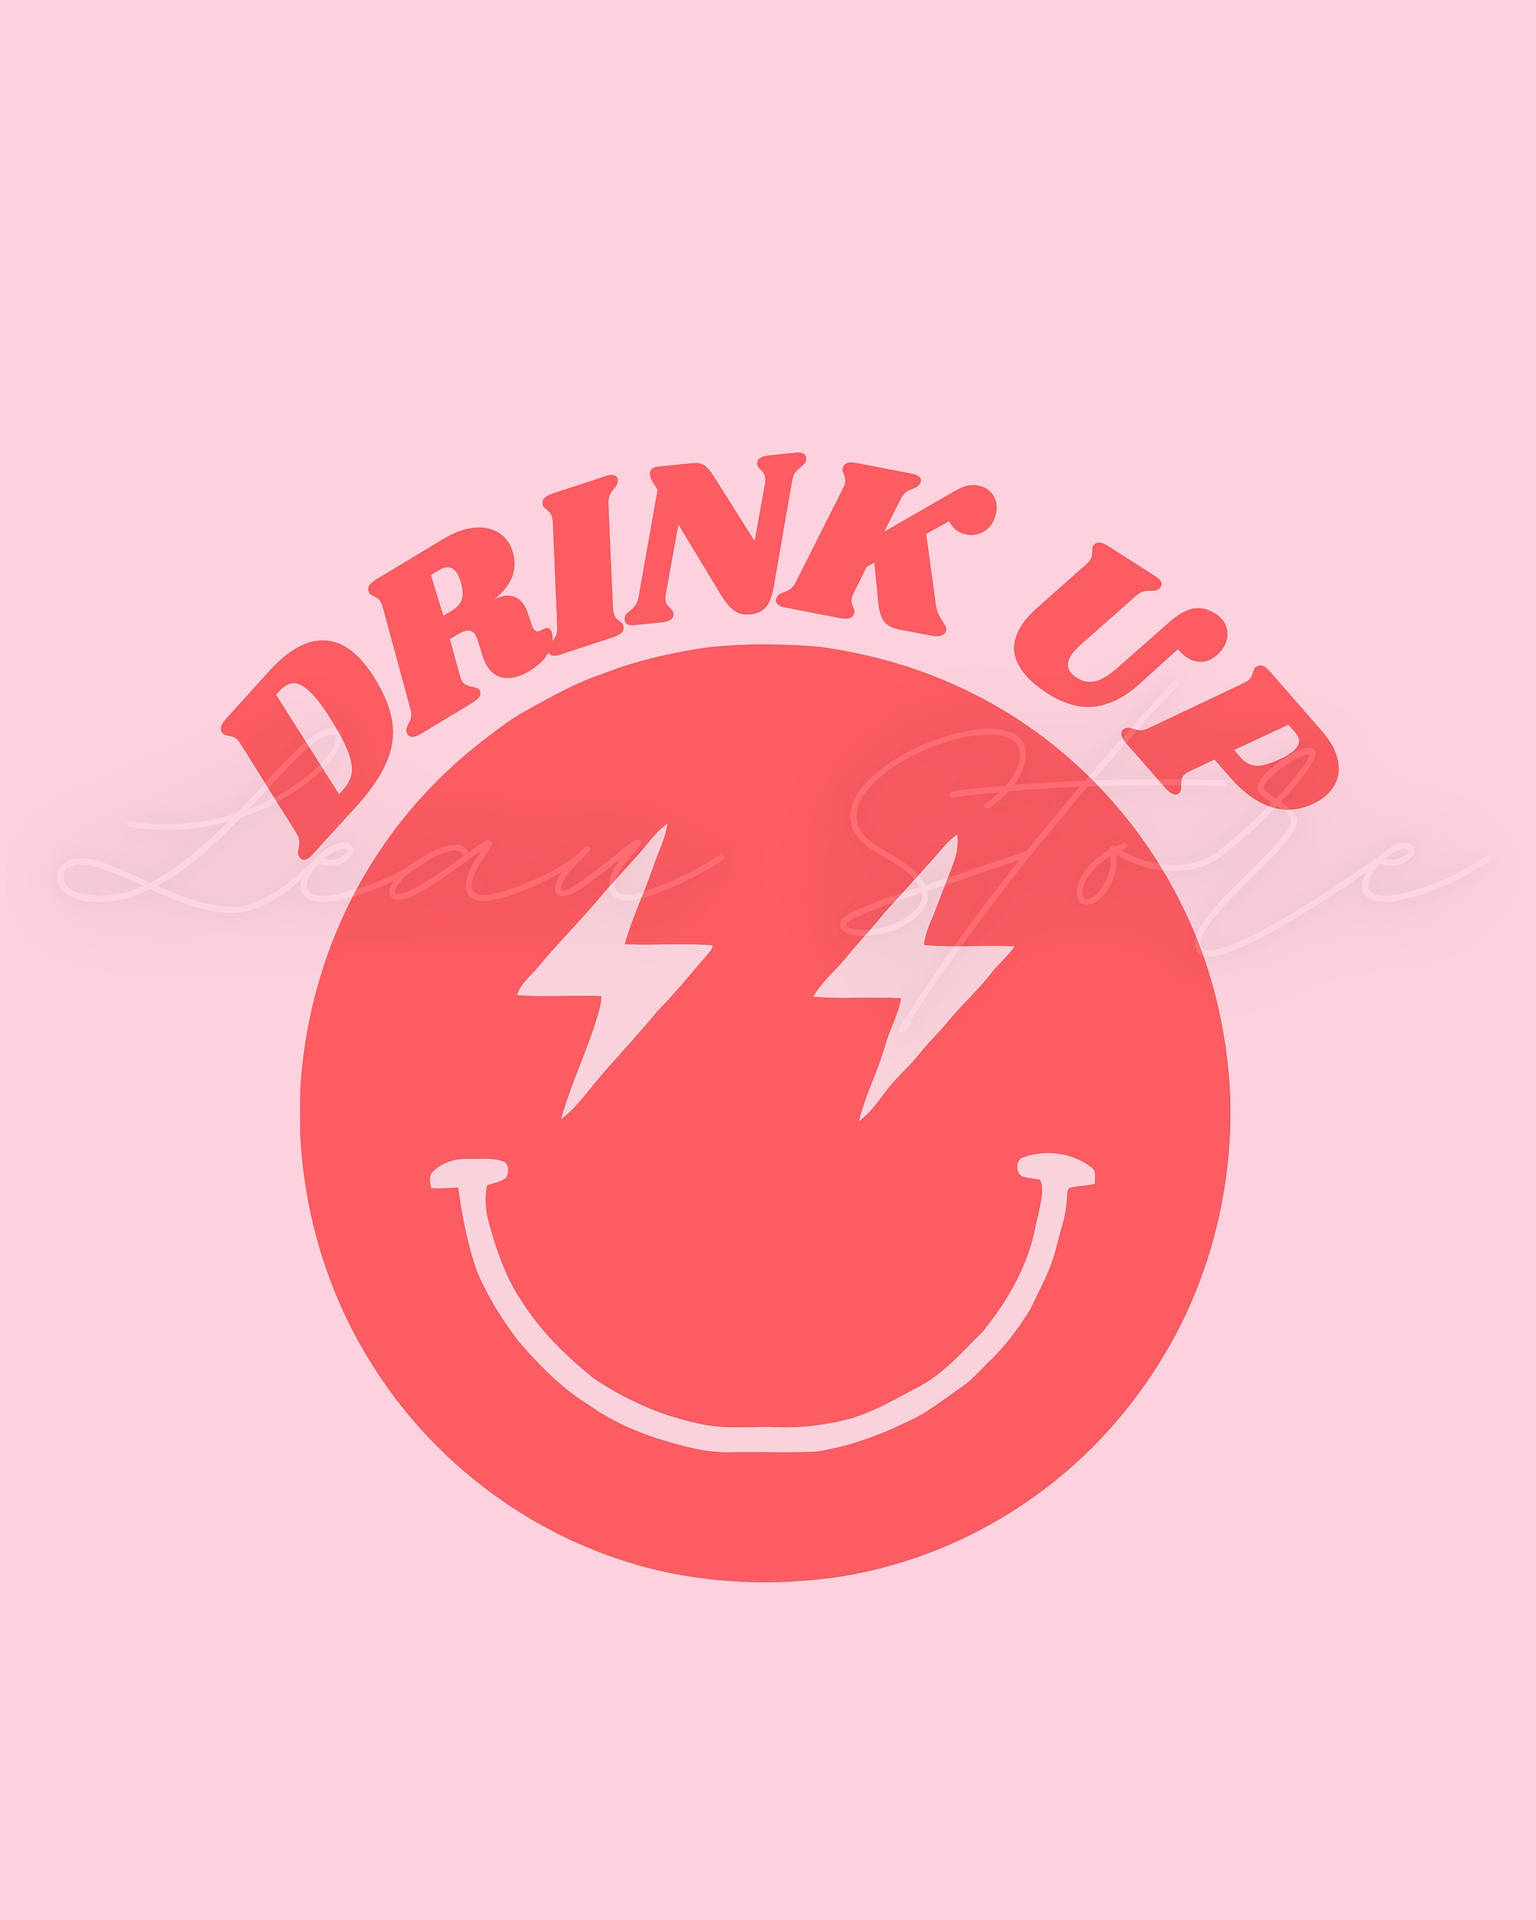 Download Preppy Smiley Face Drink Up Wallpaper